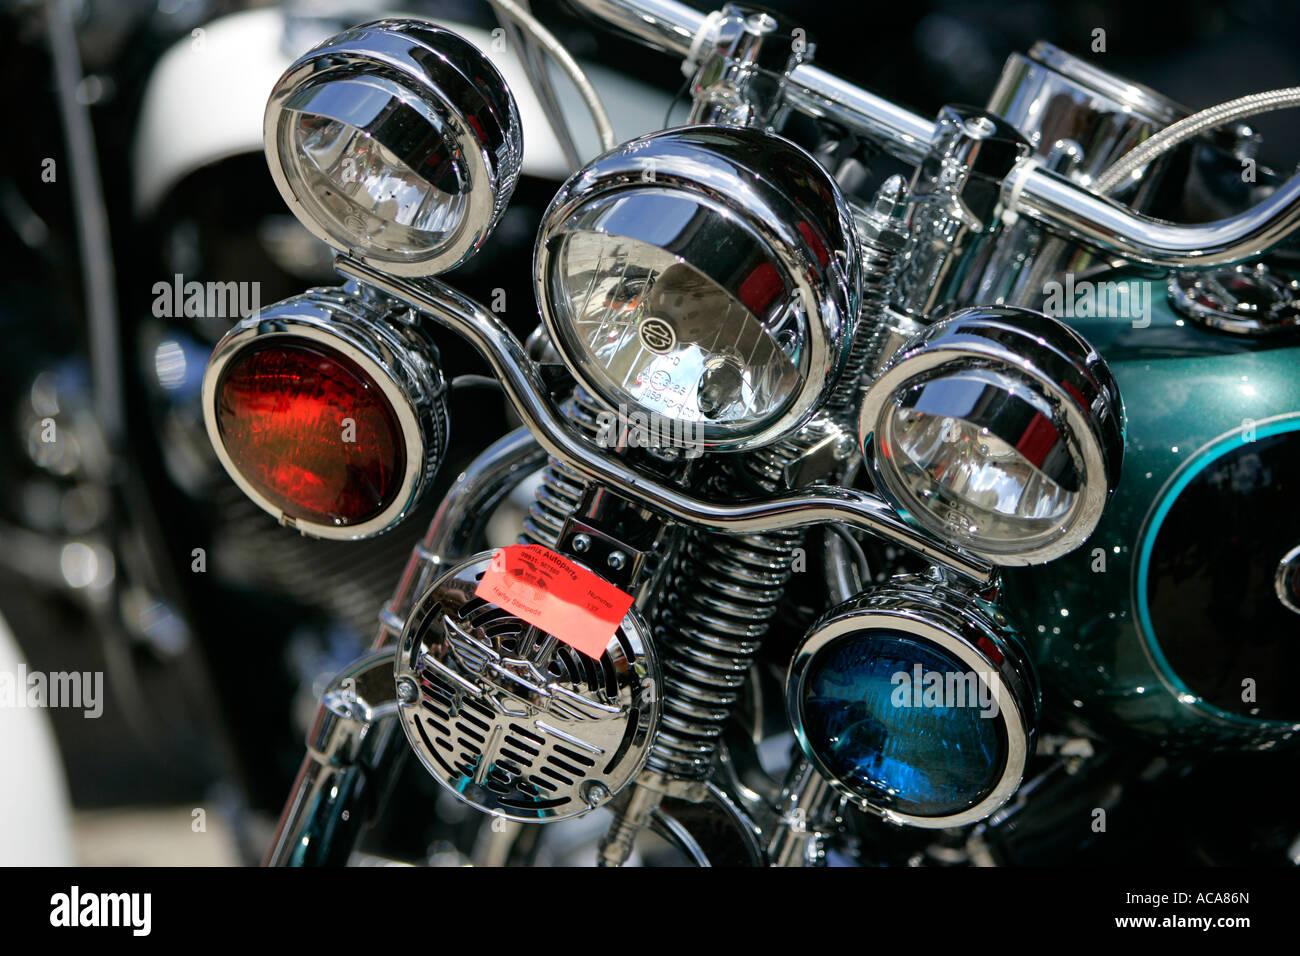 Harley Davidson, detail Stock Photo